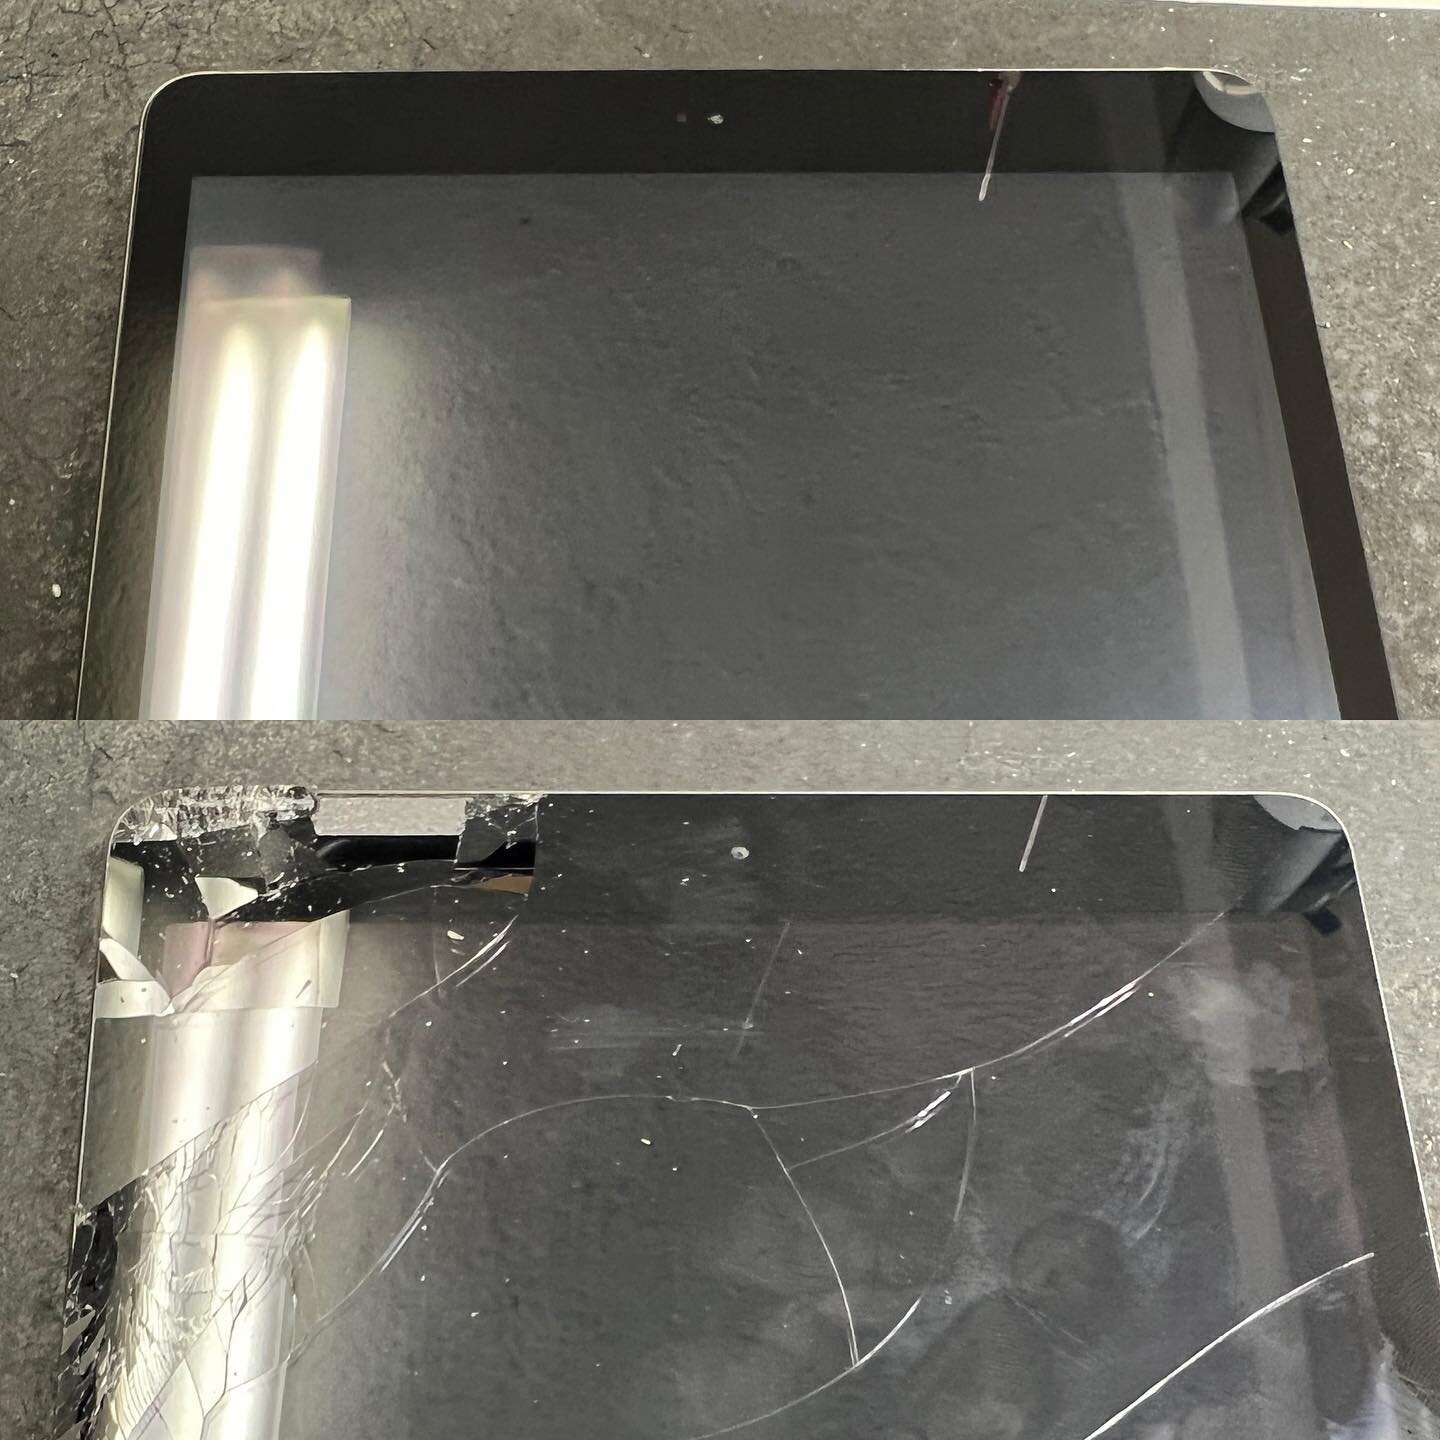 iPad glass replacement. Call today or visit the website to schedule your repair today #iphonerepair #ipadrepair #losangles #applerepair #backglass